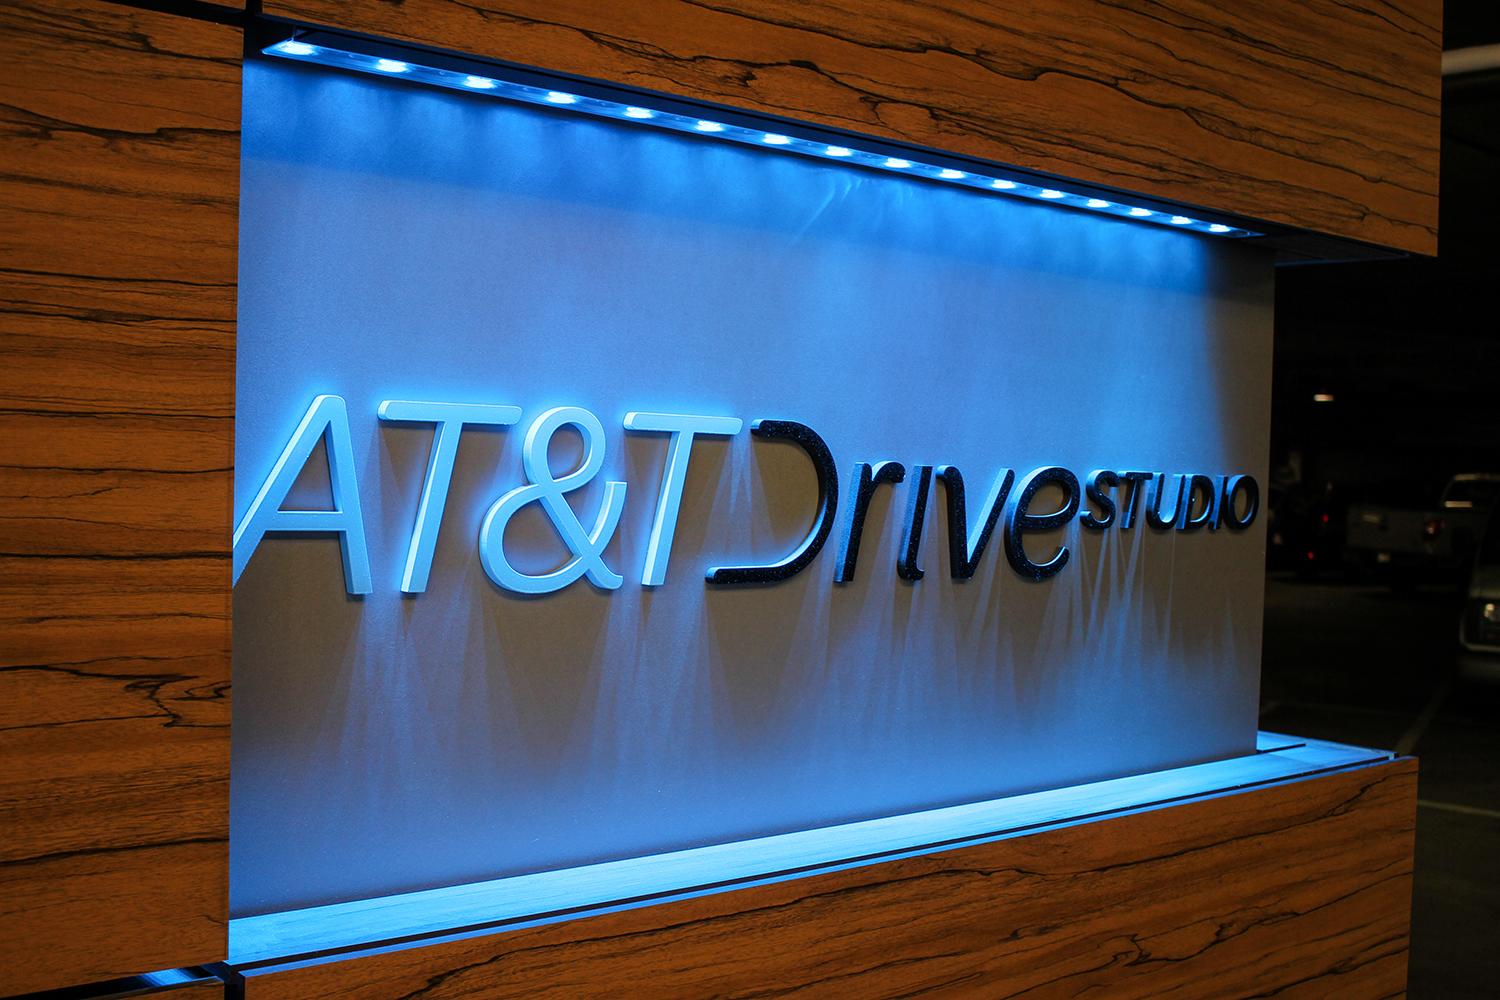 AT&T Drive Studio